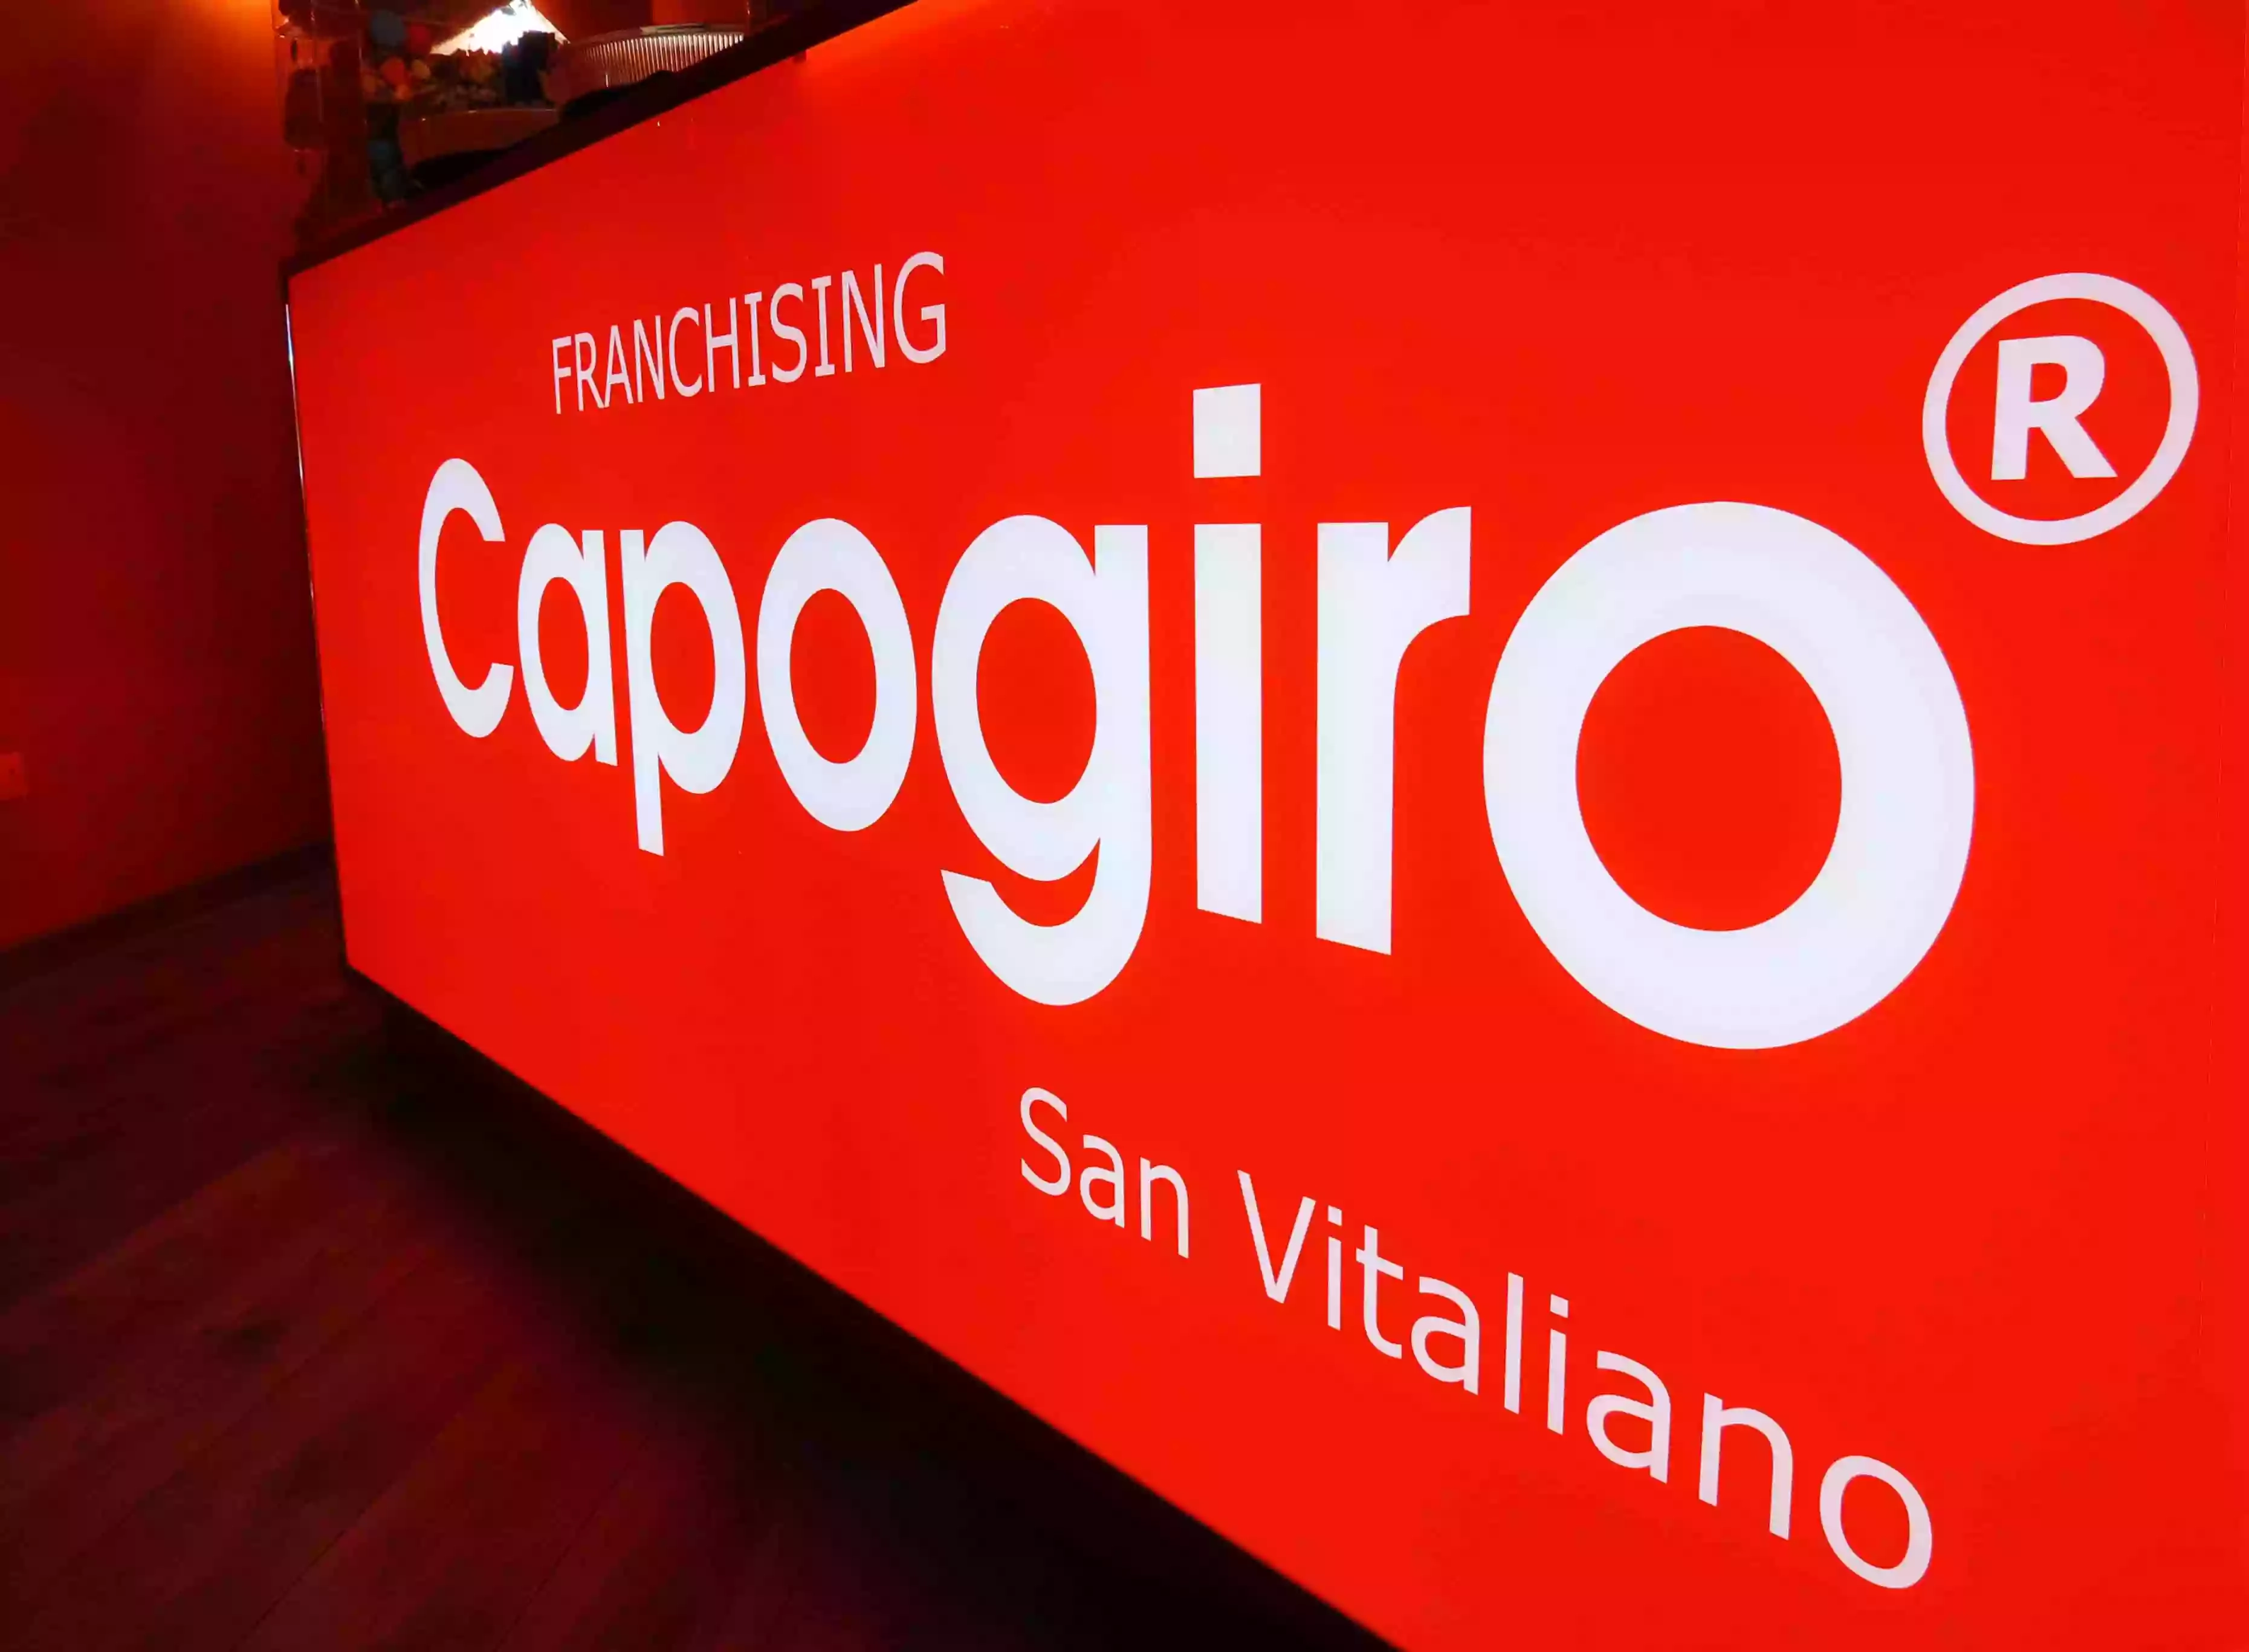 Capogiro San Vitaliano - Cocktail Bar Napoli